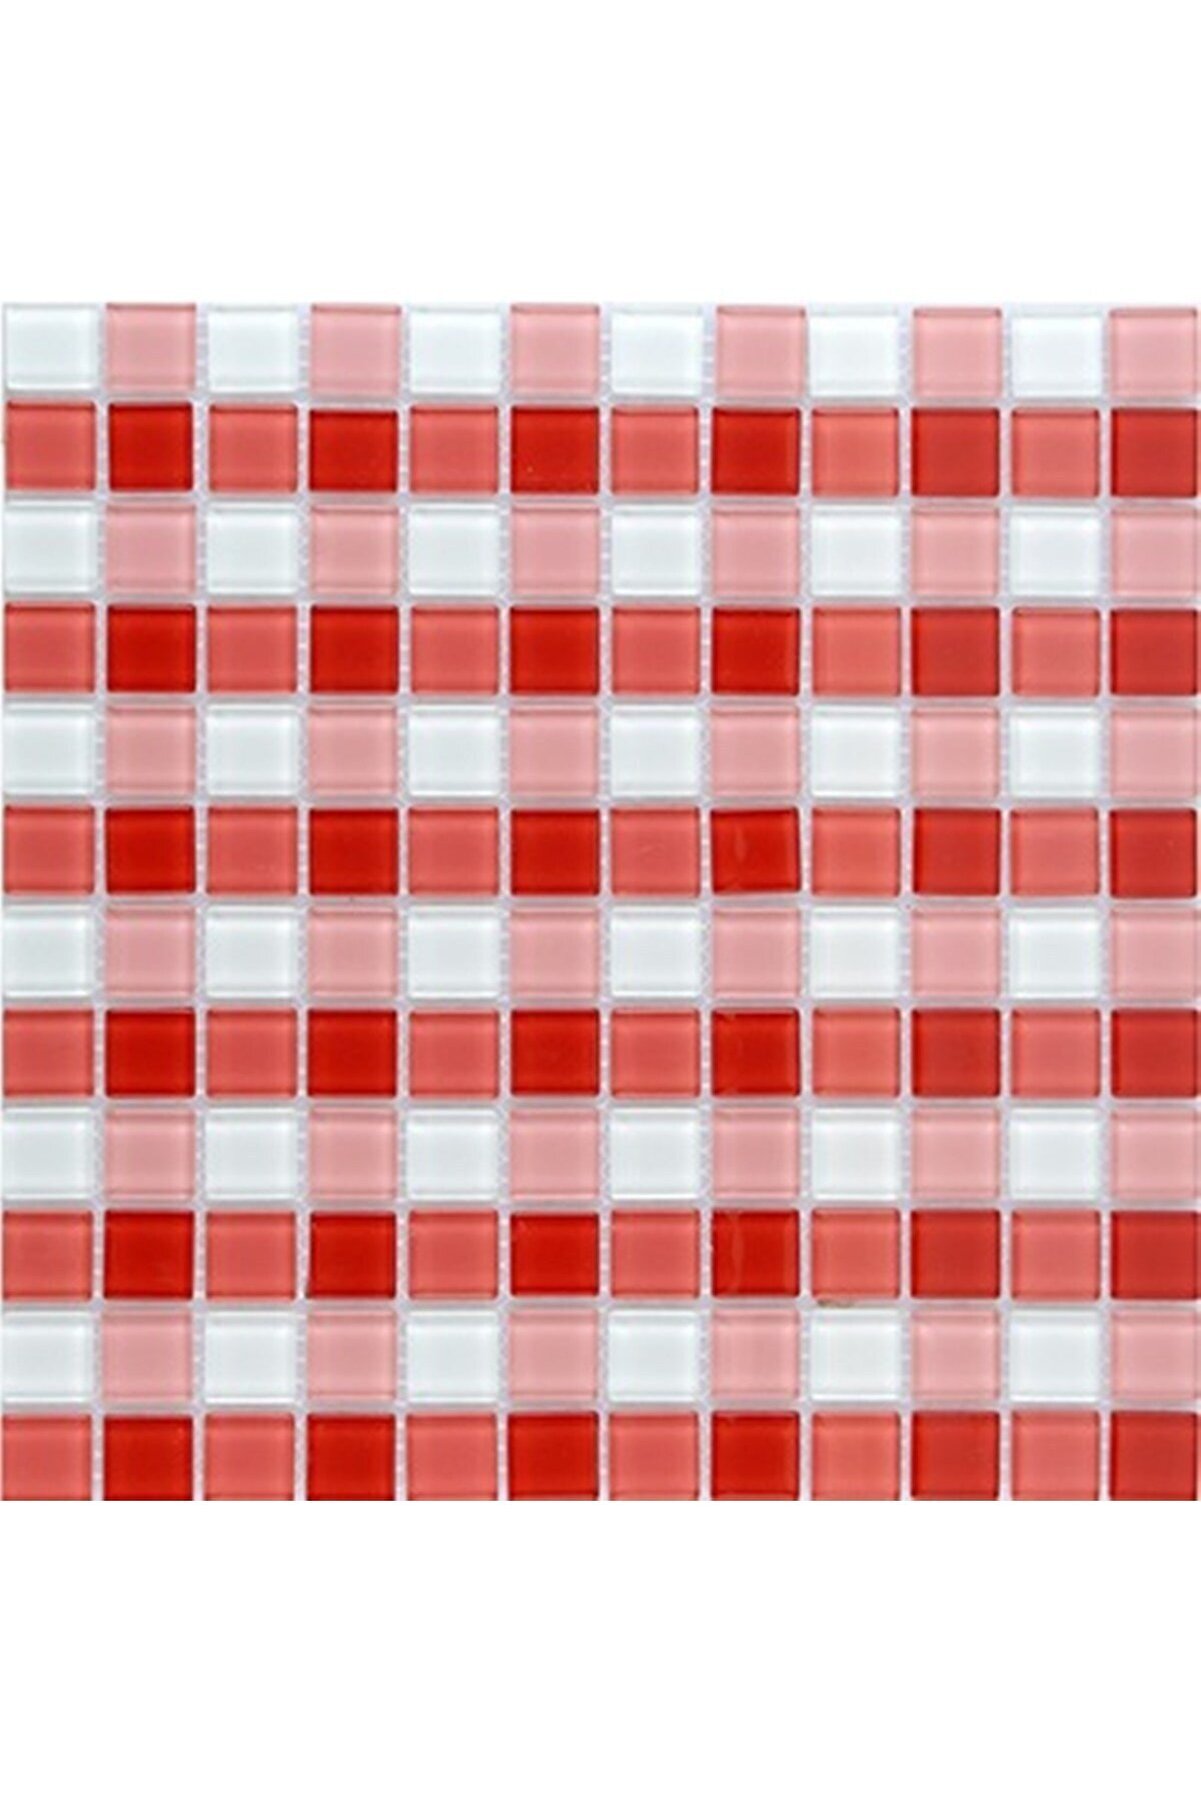 maycollection Pembe Kırmızı Beyaz 4 mm Kristal Cam Mozaik 1 M2